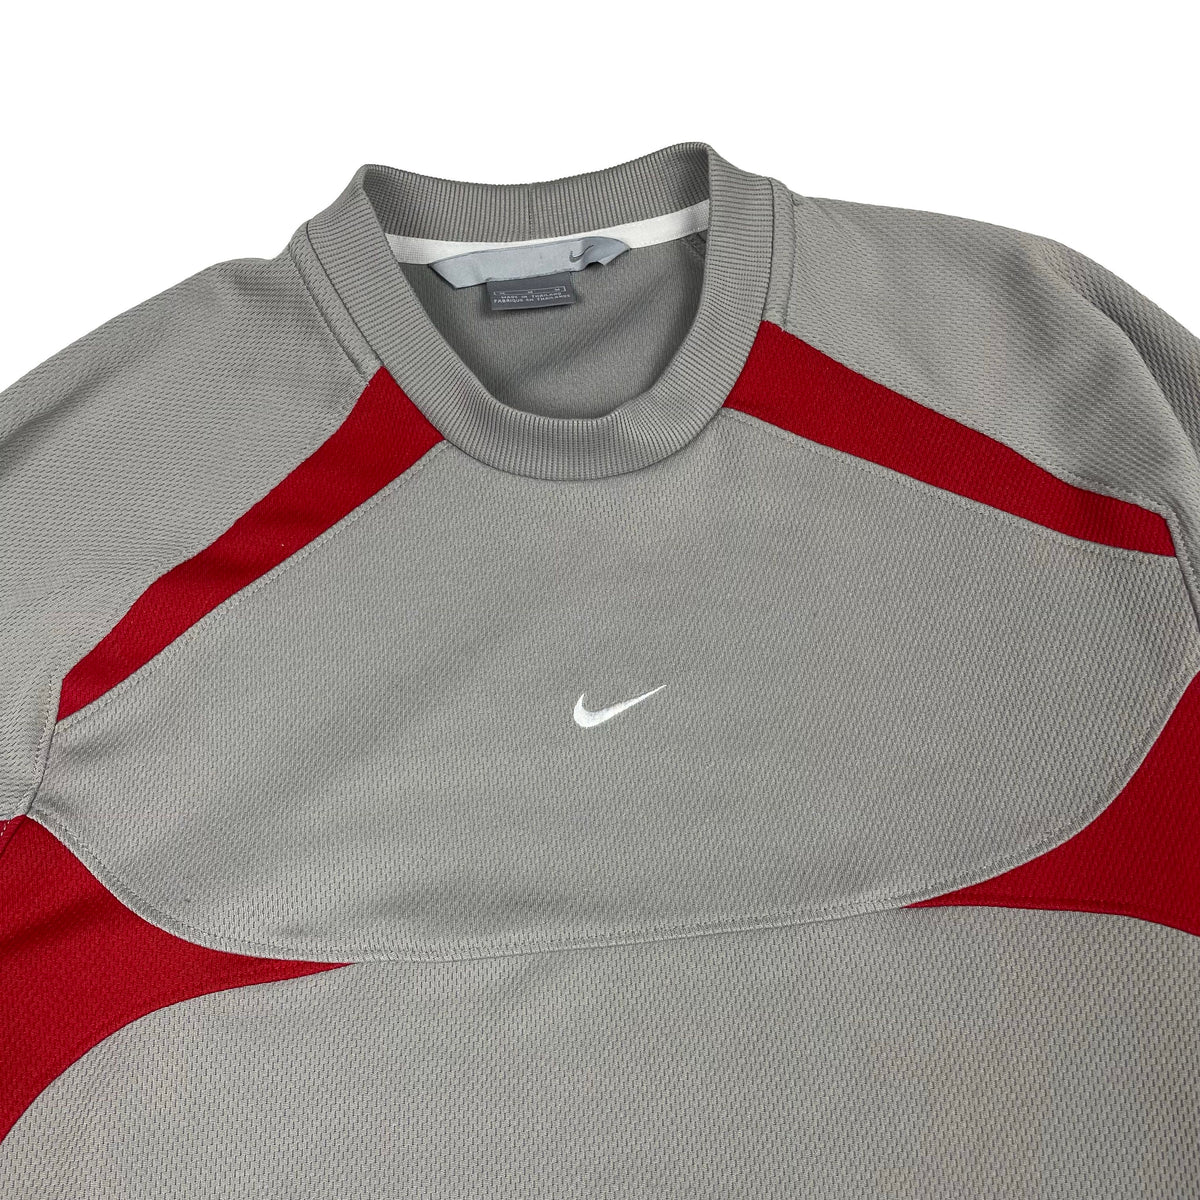 2000s Nike center swoosh mesh longsleeve – Nab Vintage